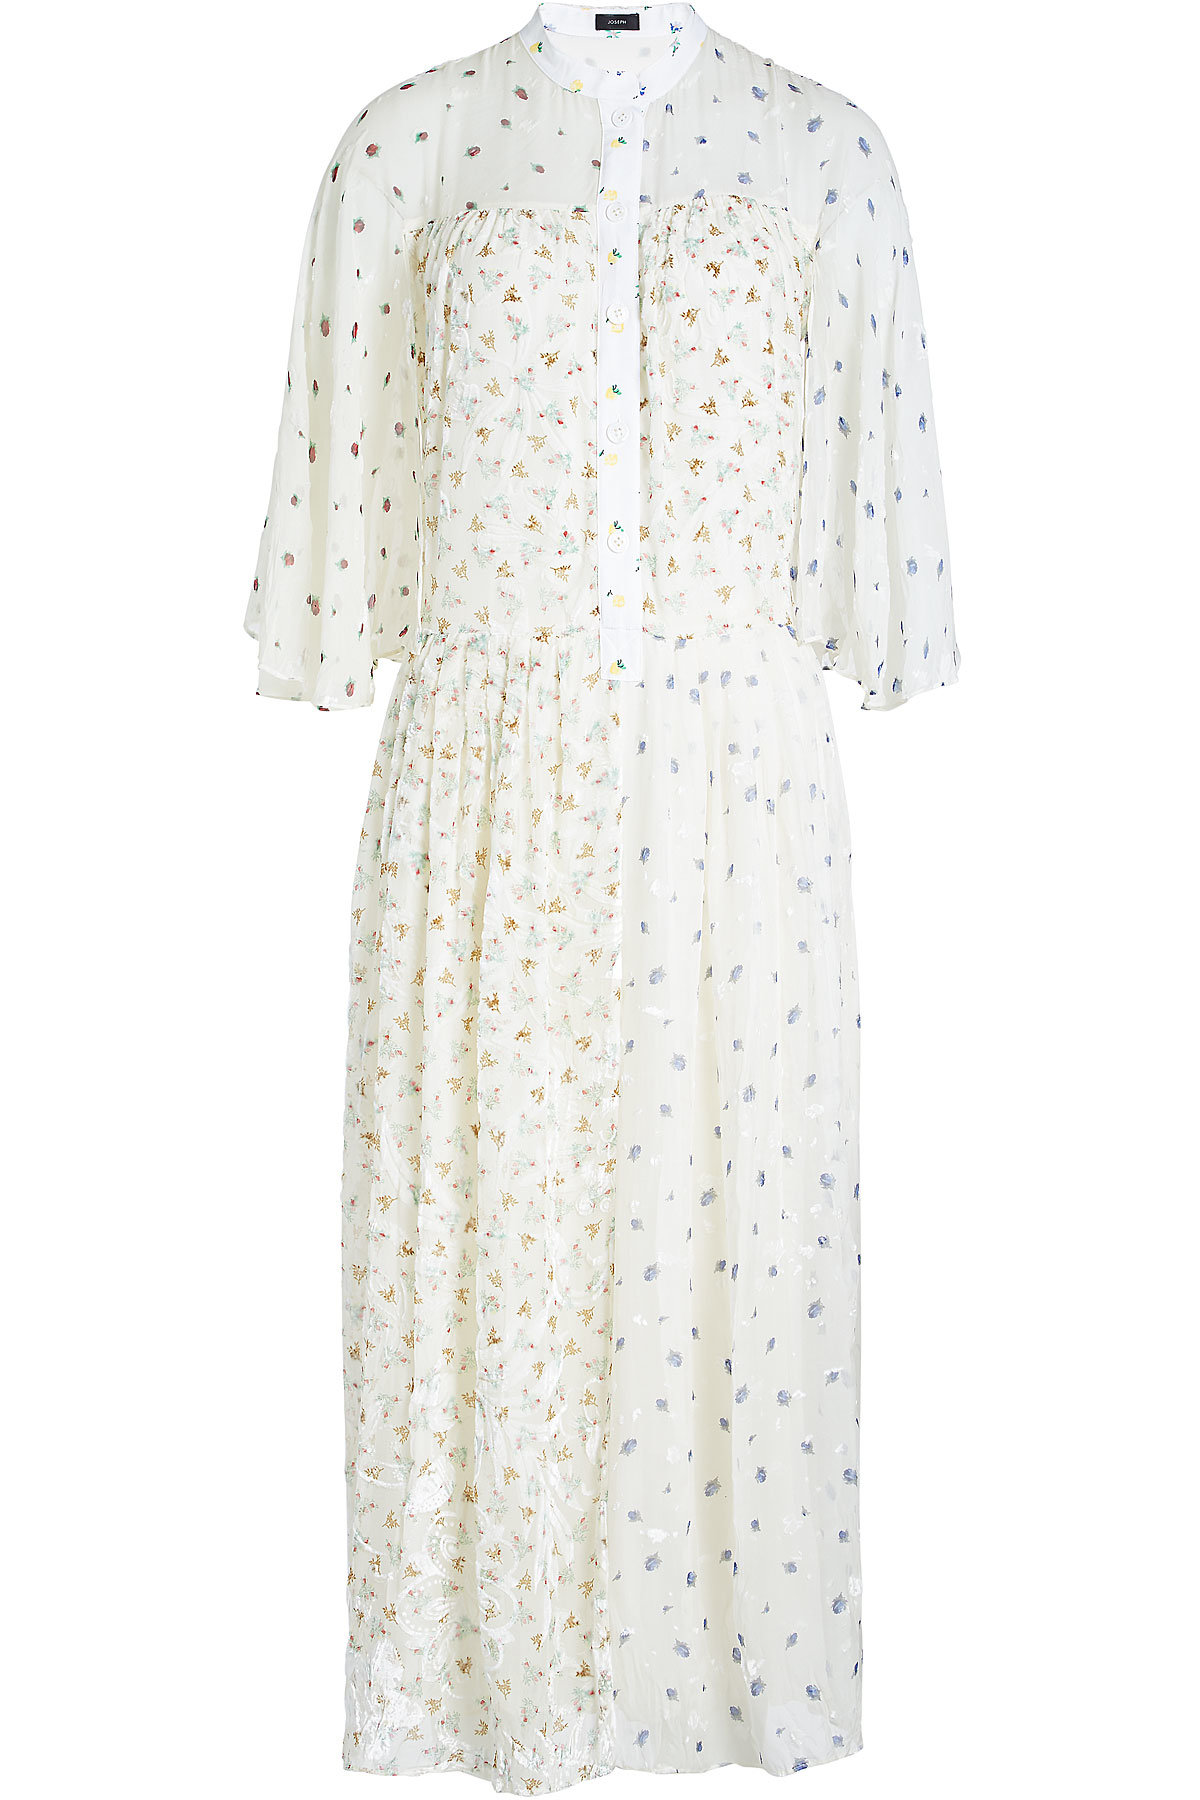 Joseph - Mirrisso Embroidered Silk Dress